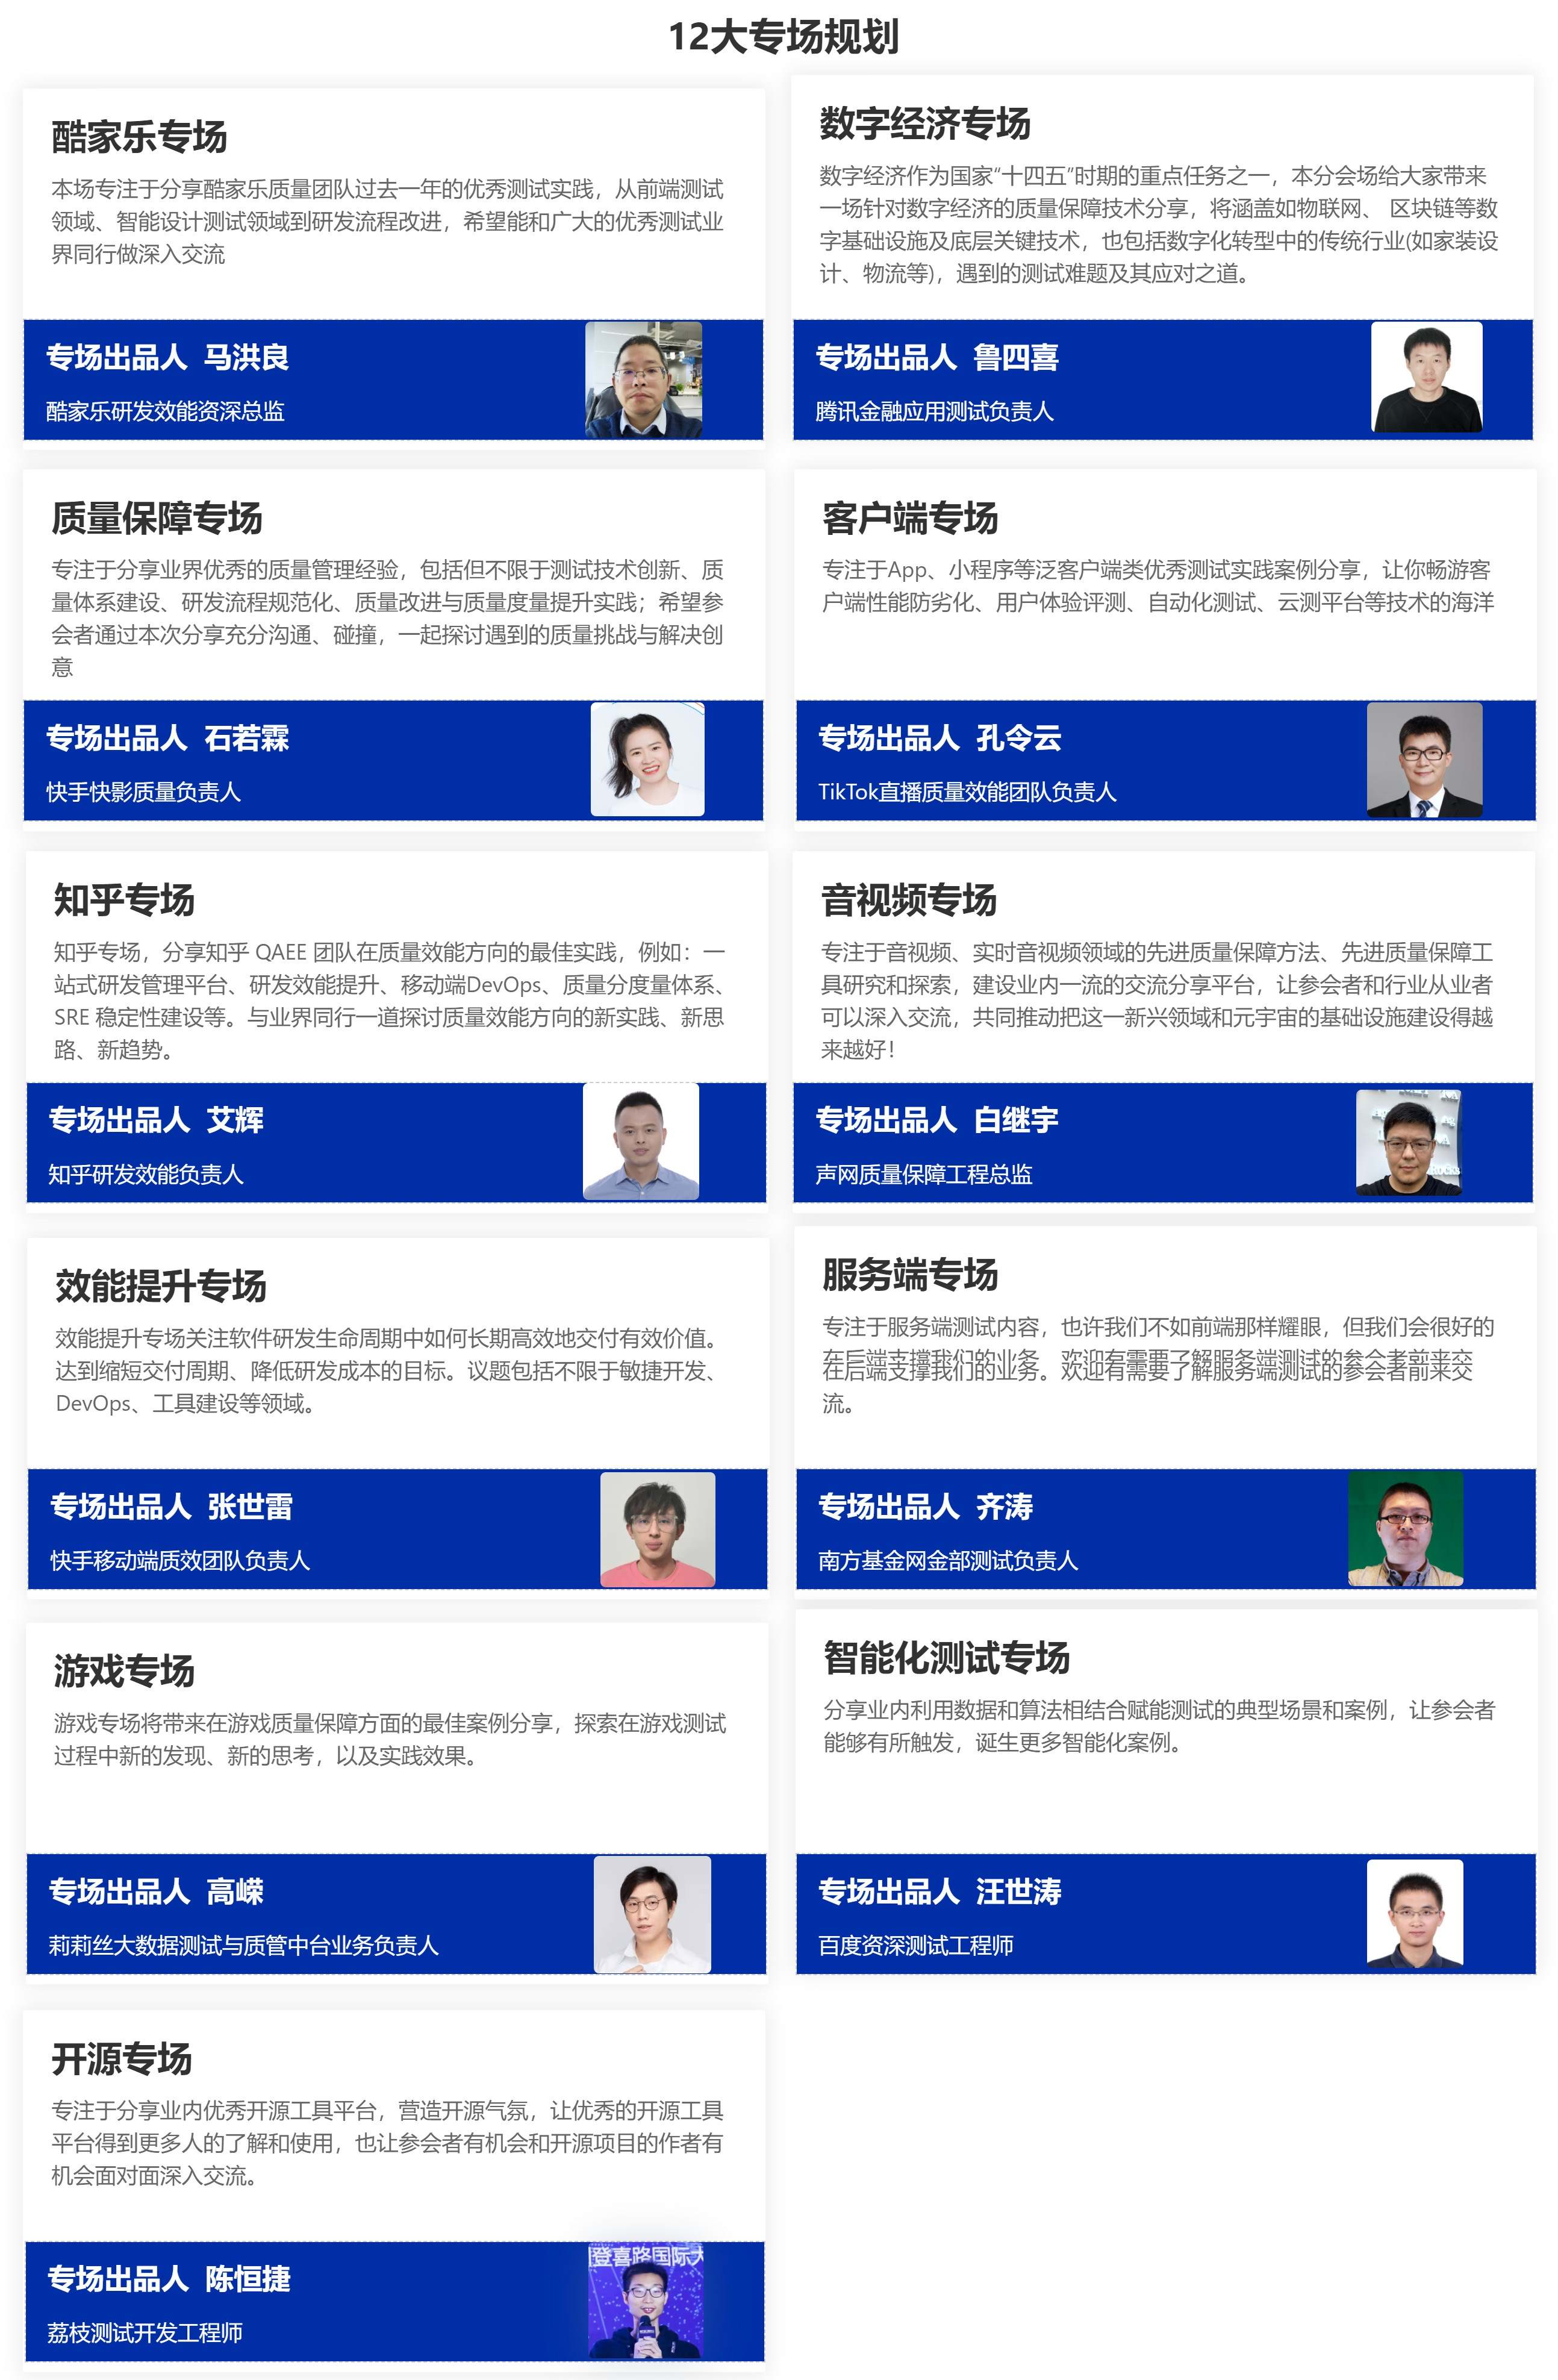 MTSC2023中國互聯網測試開發大會.-上海站